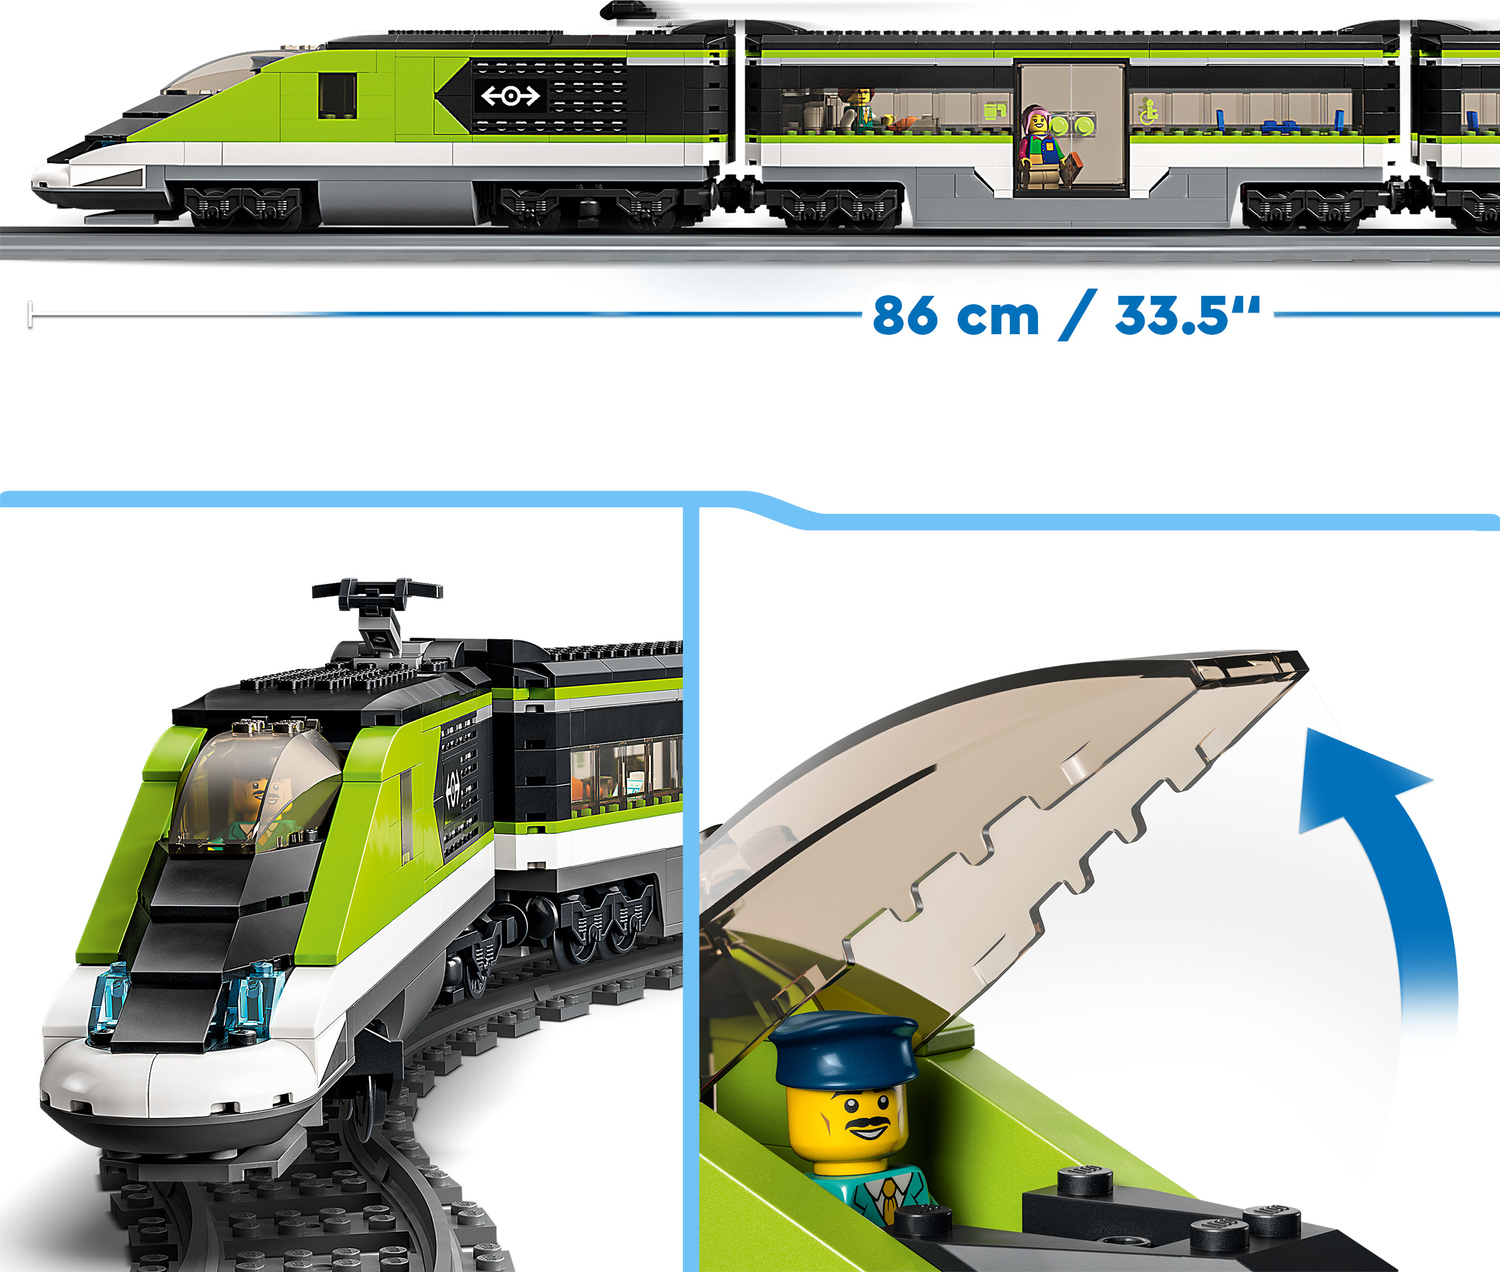 LEGO City Express Passenger Train RC Set - Imagination Toys